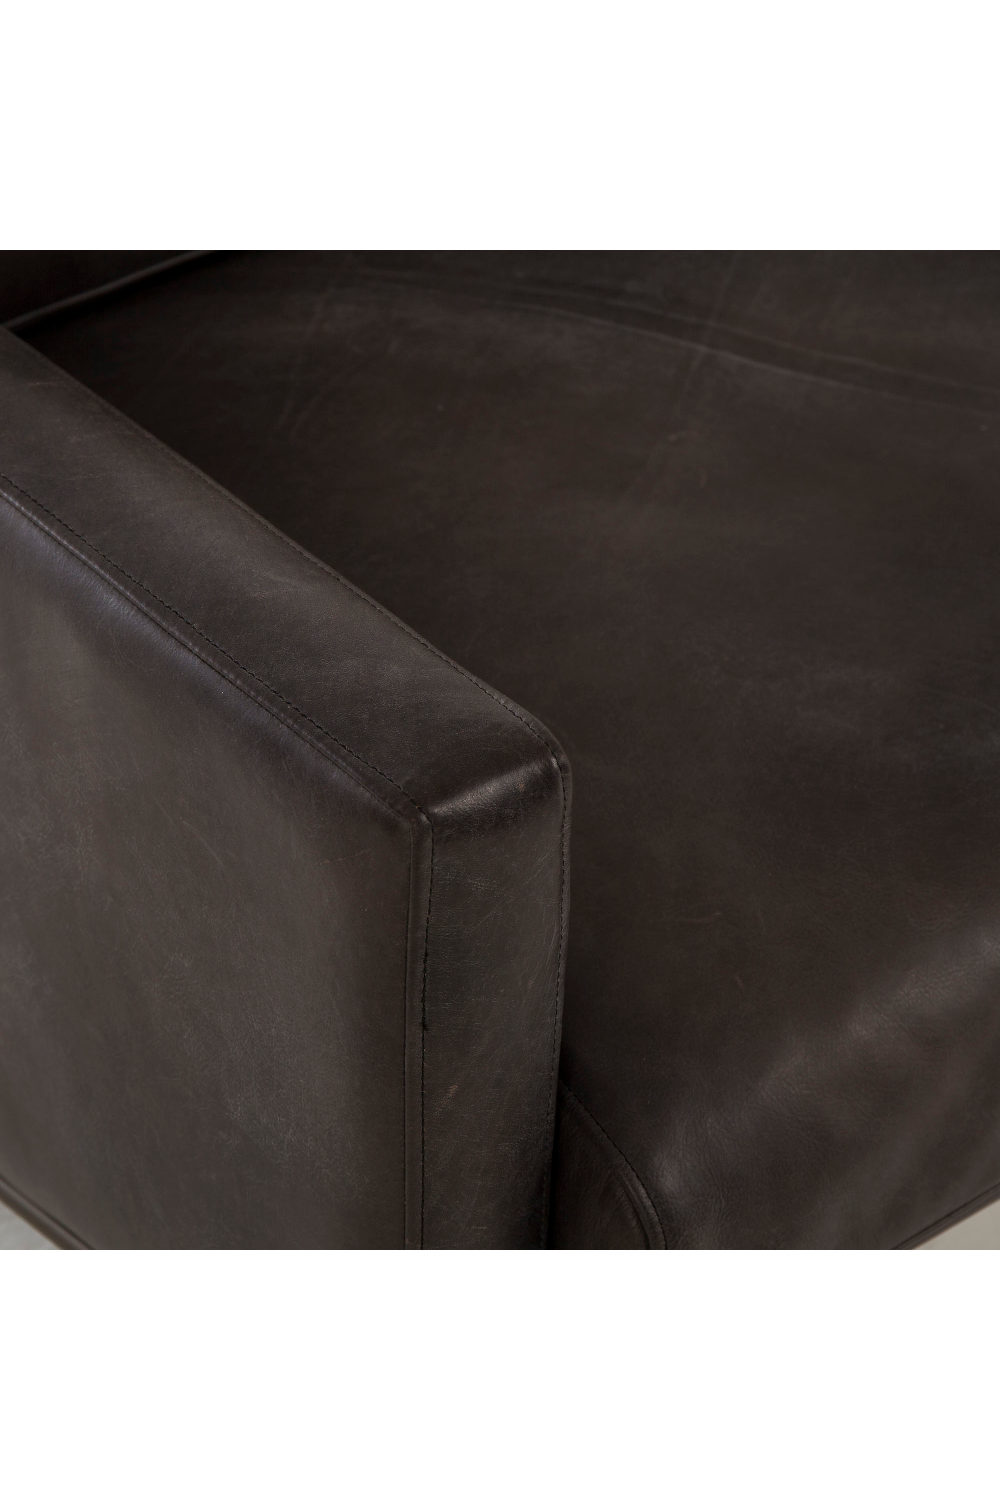 Black Leather Sofa | Andrew Martin Vanessa | Oroa.com